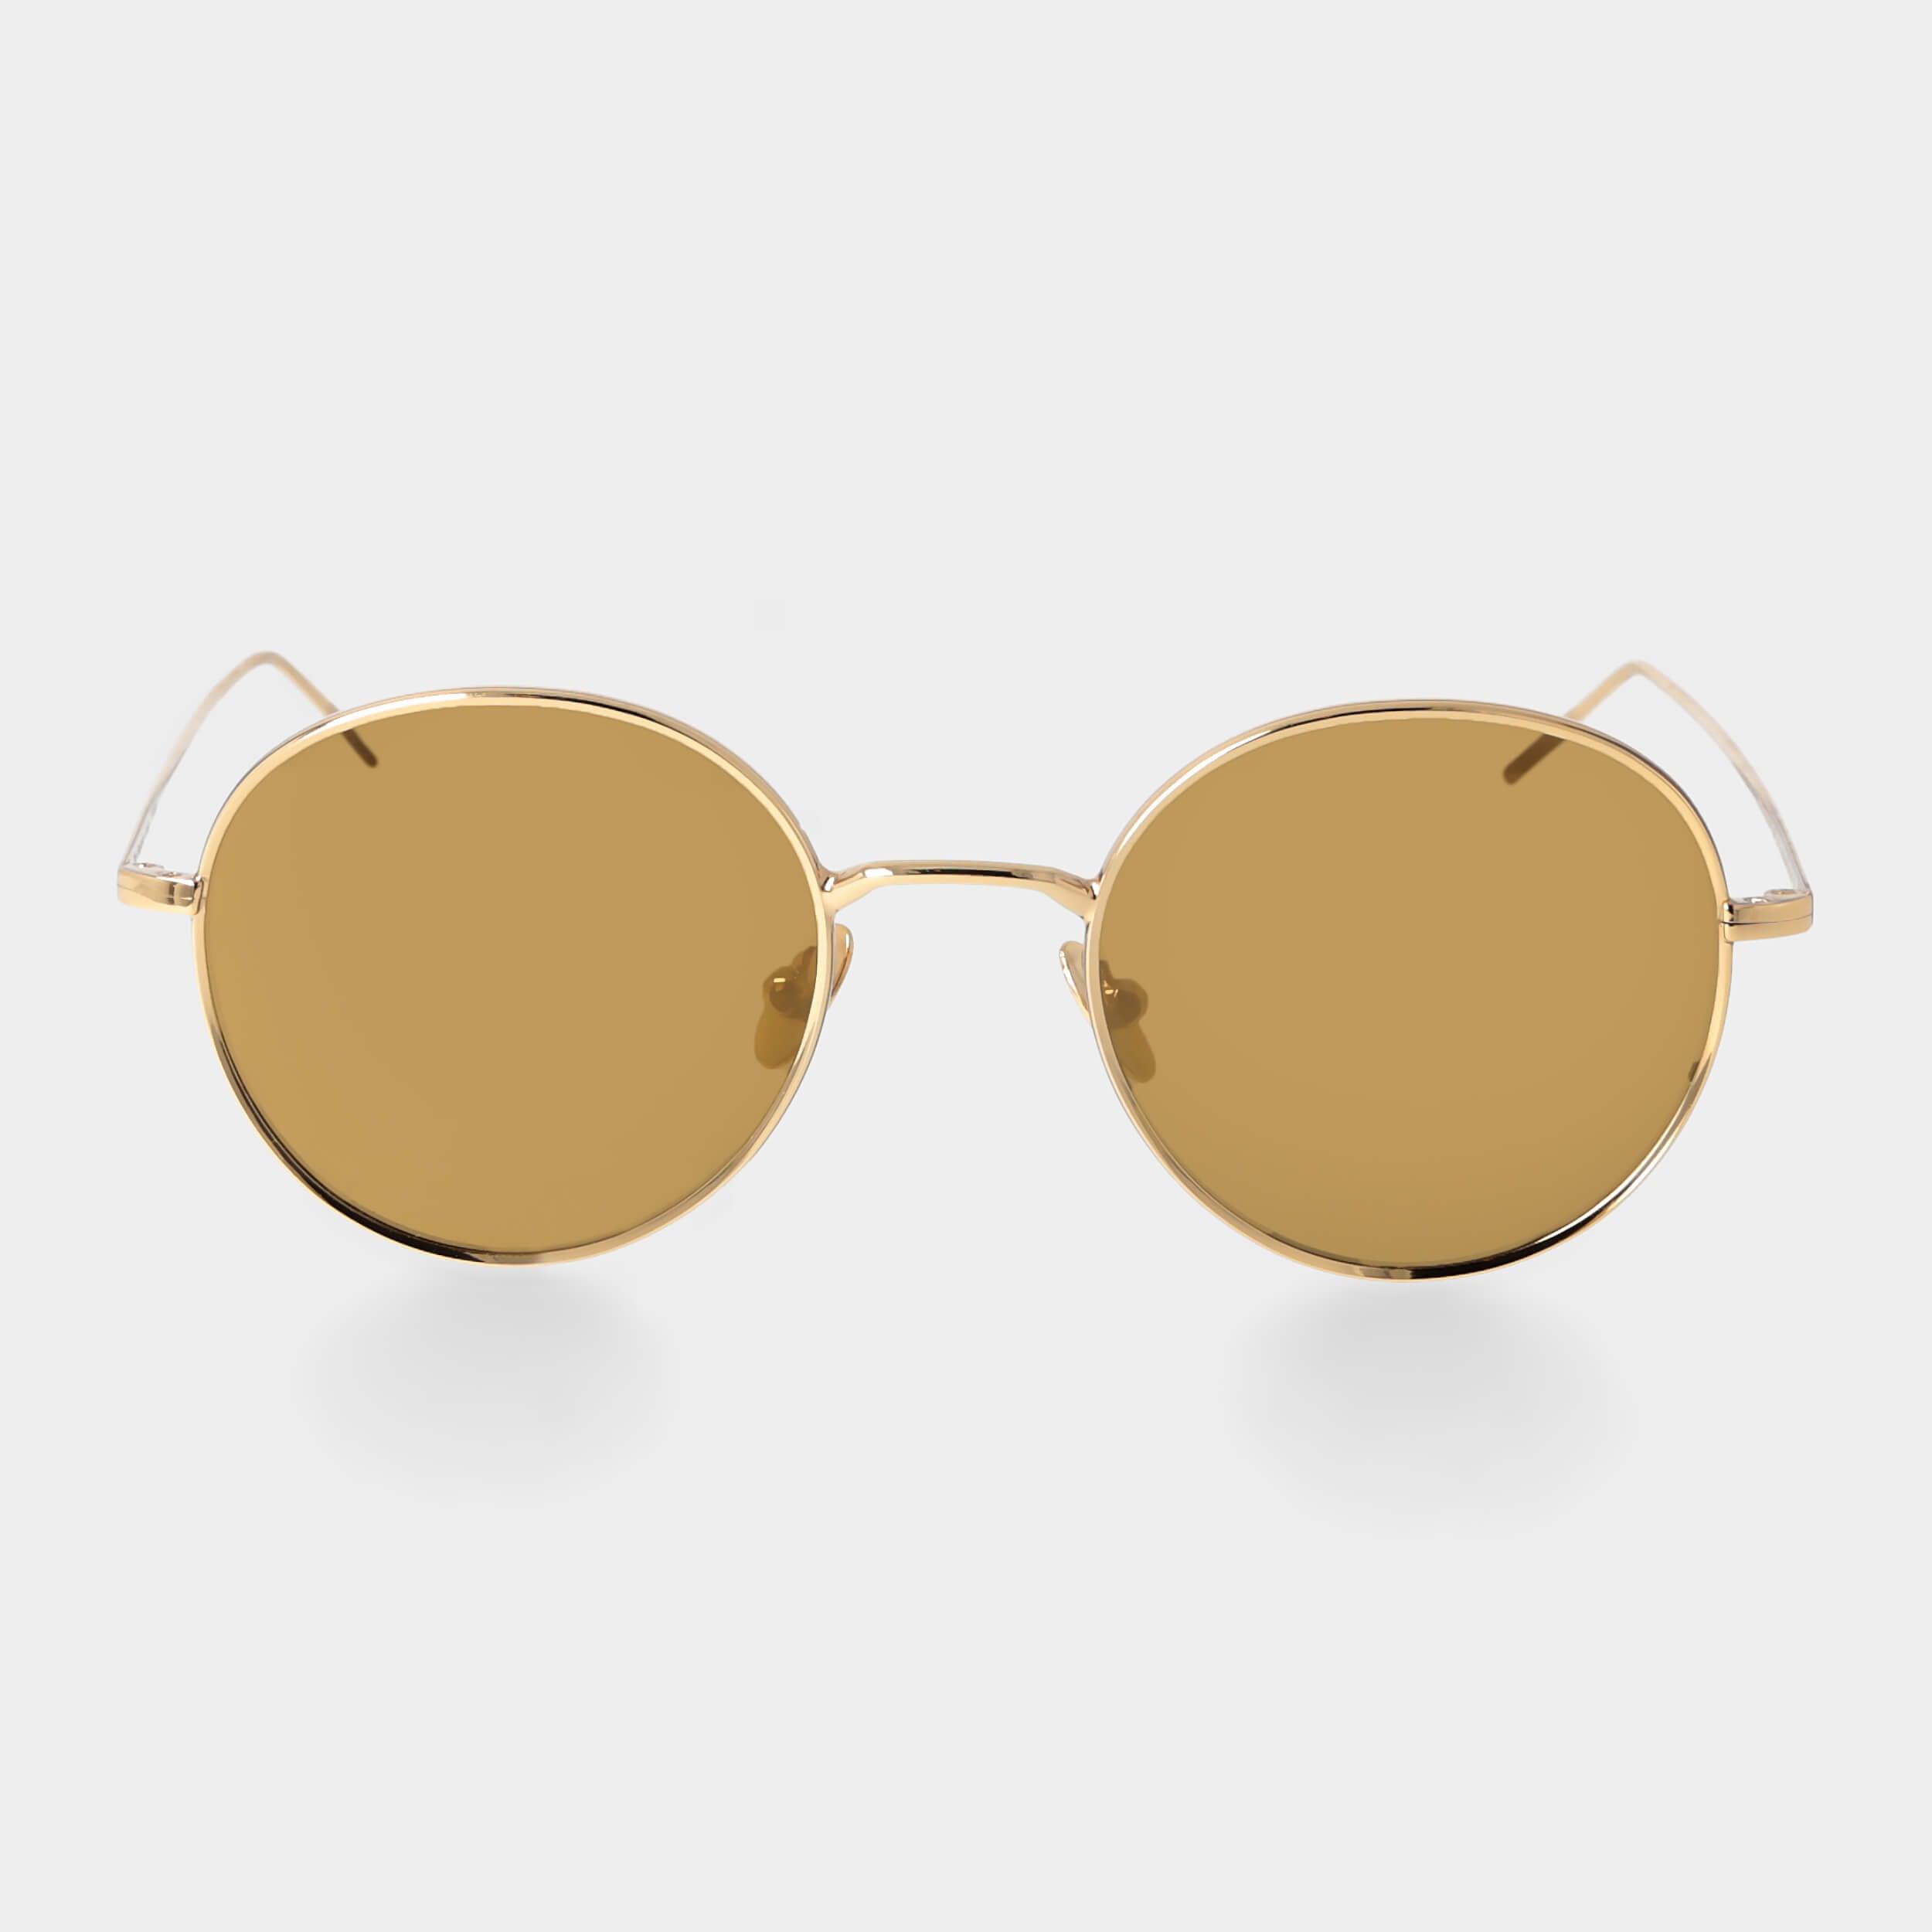 Sunglasses with Brown Lenses, handmade in Italy | TBD Eyewear